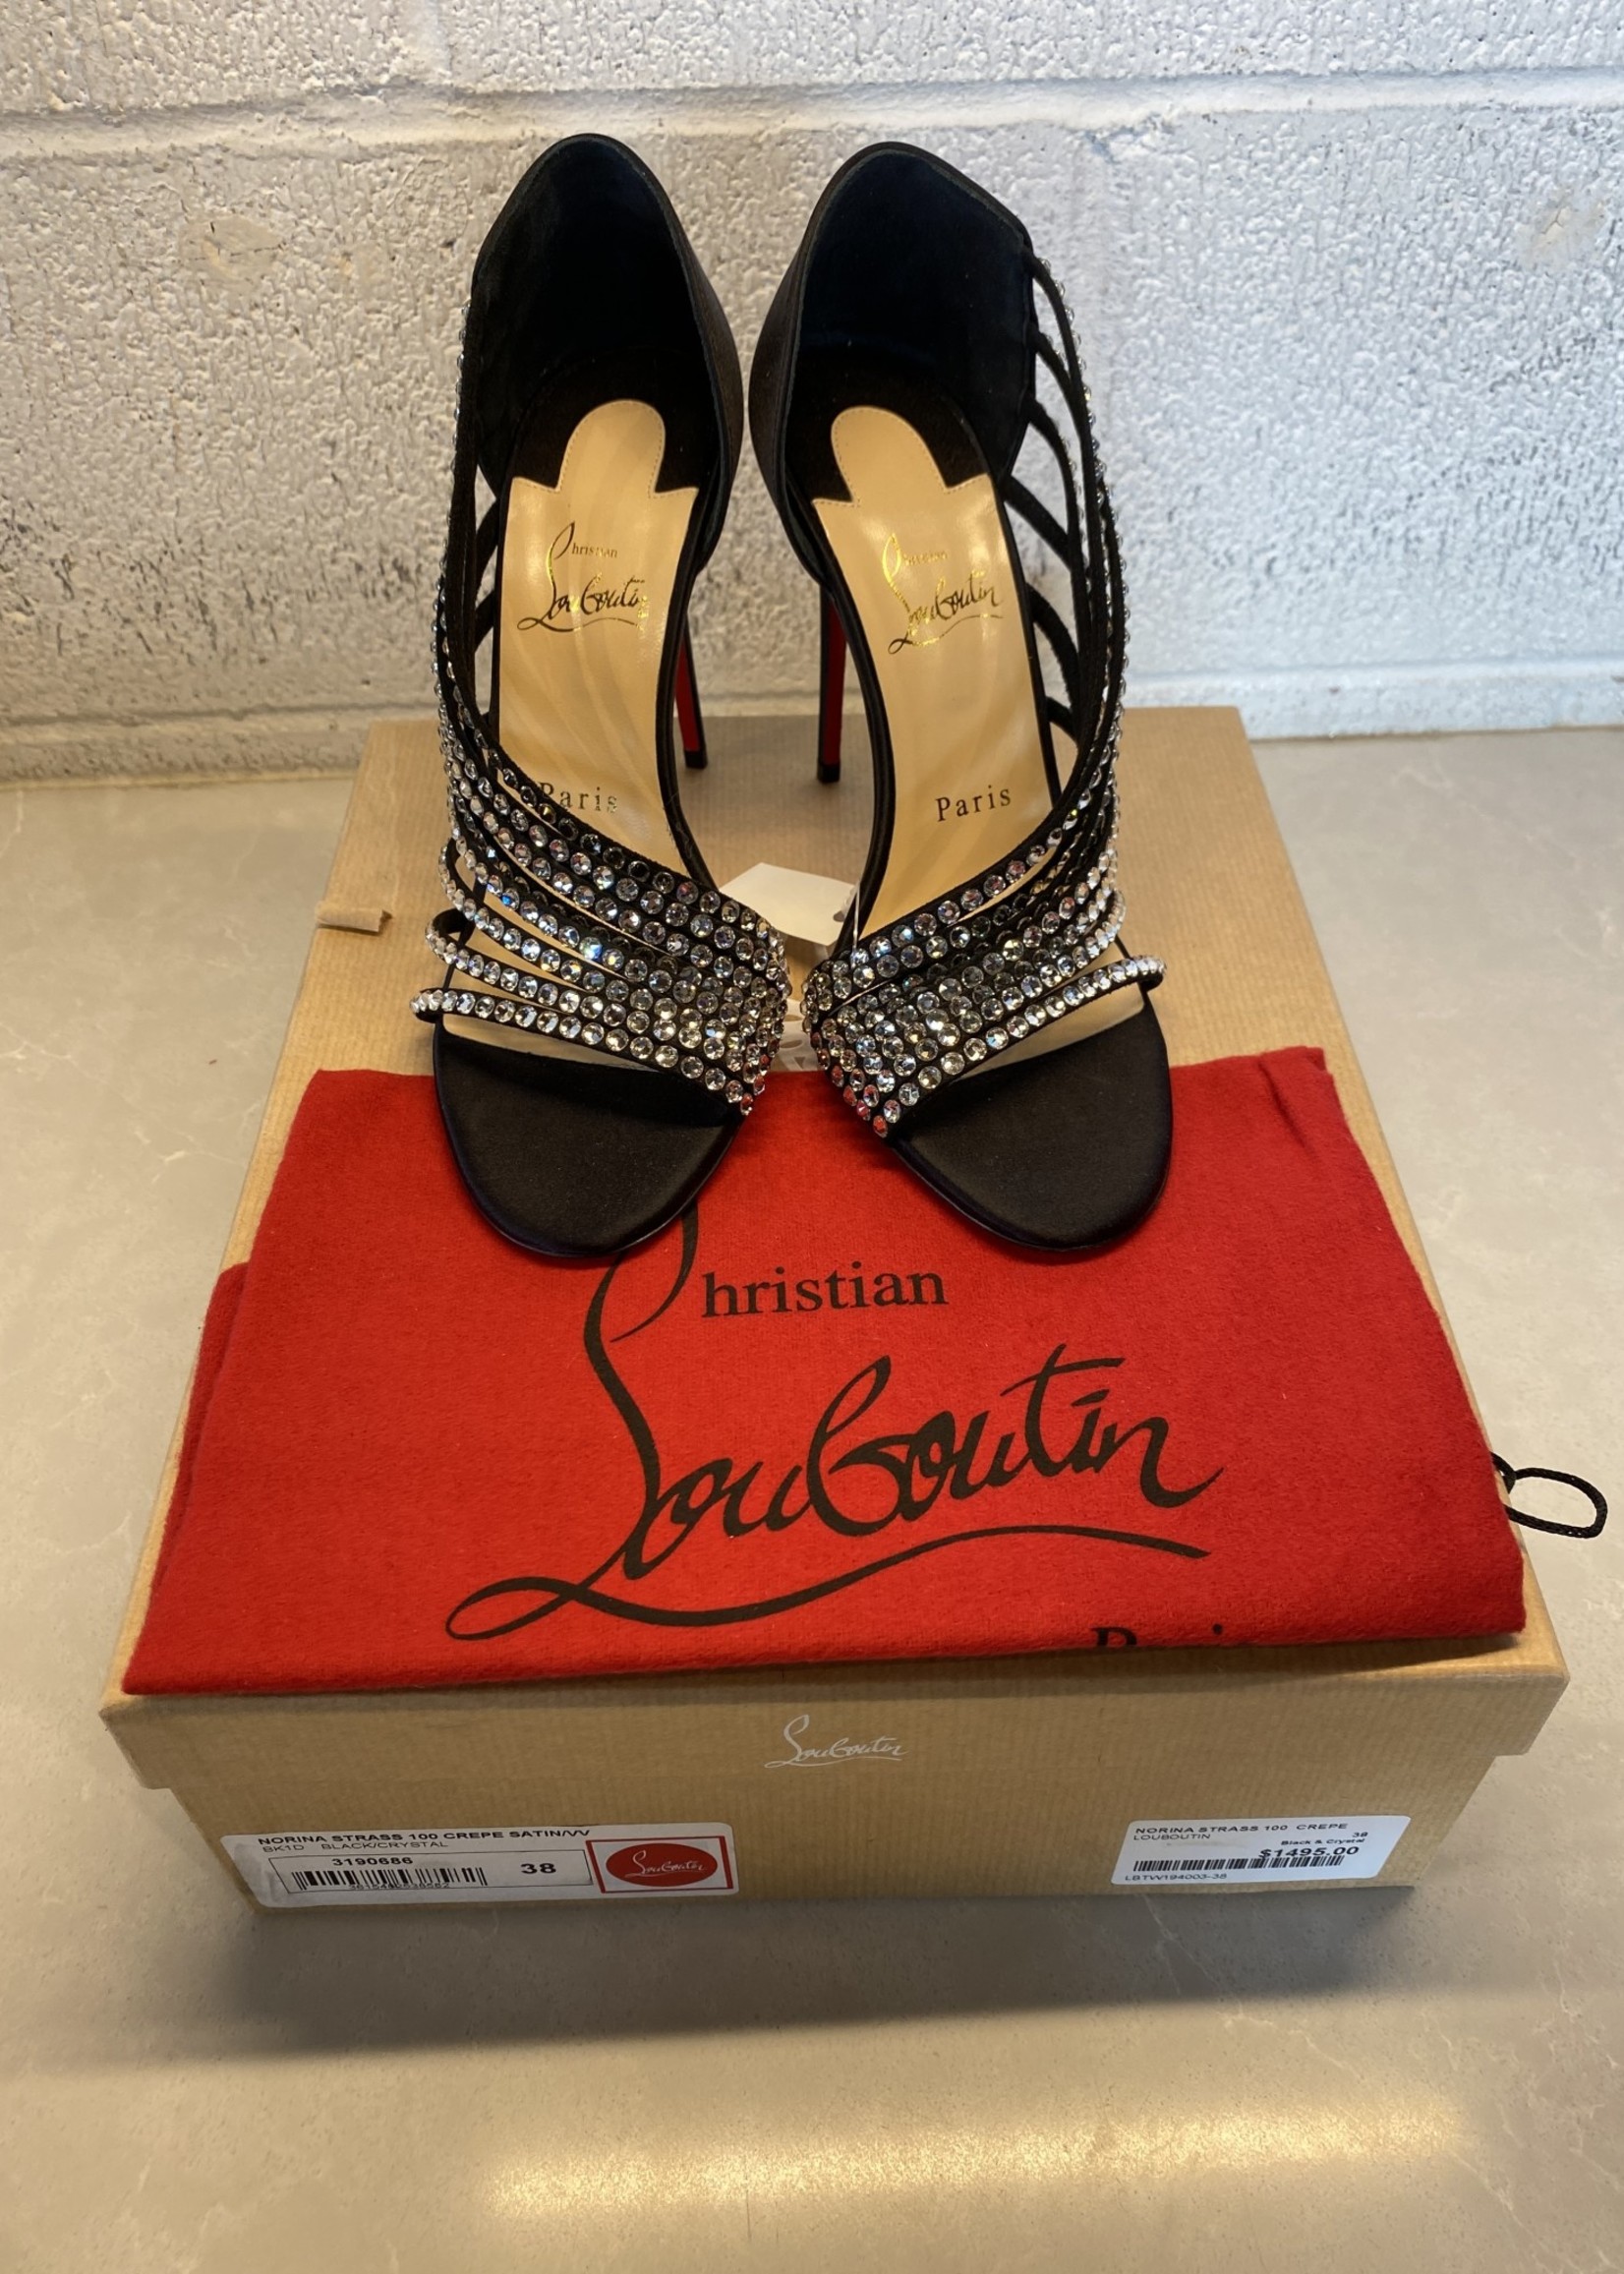 Christian Louboutin 'Norina Strass' Formal Heels (Retail: $1495) 38